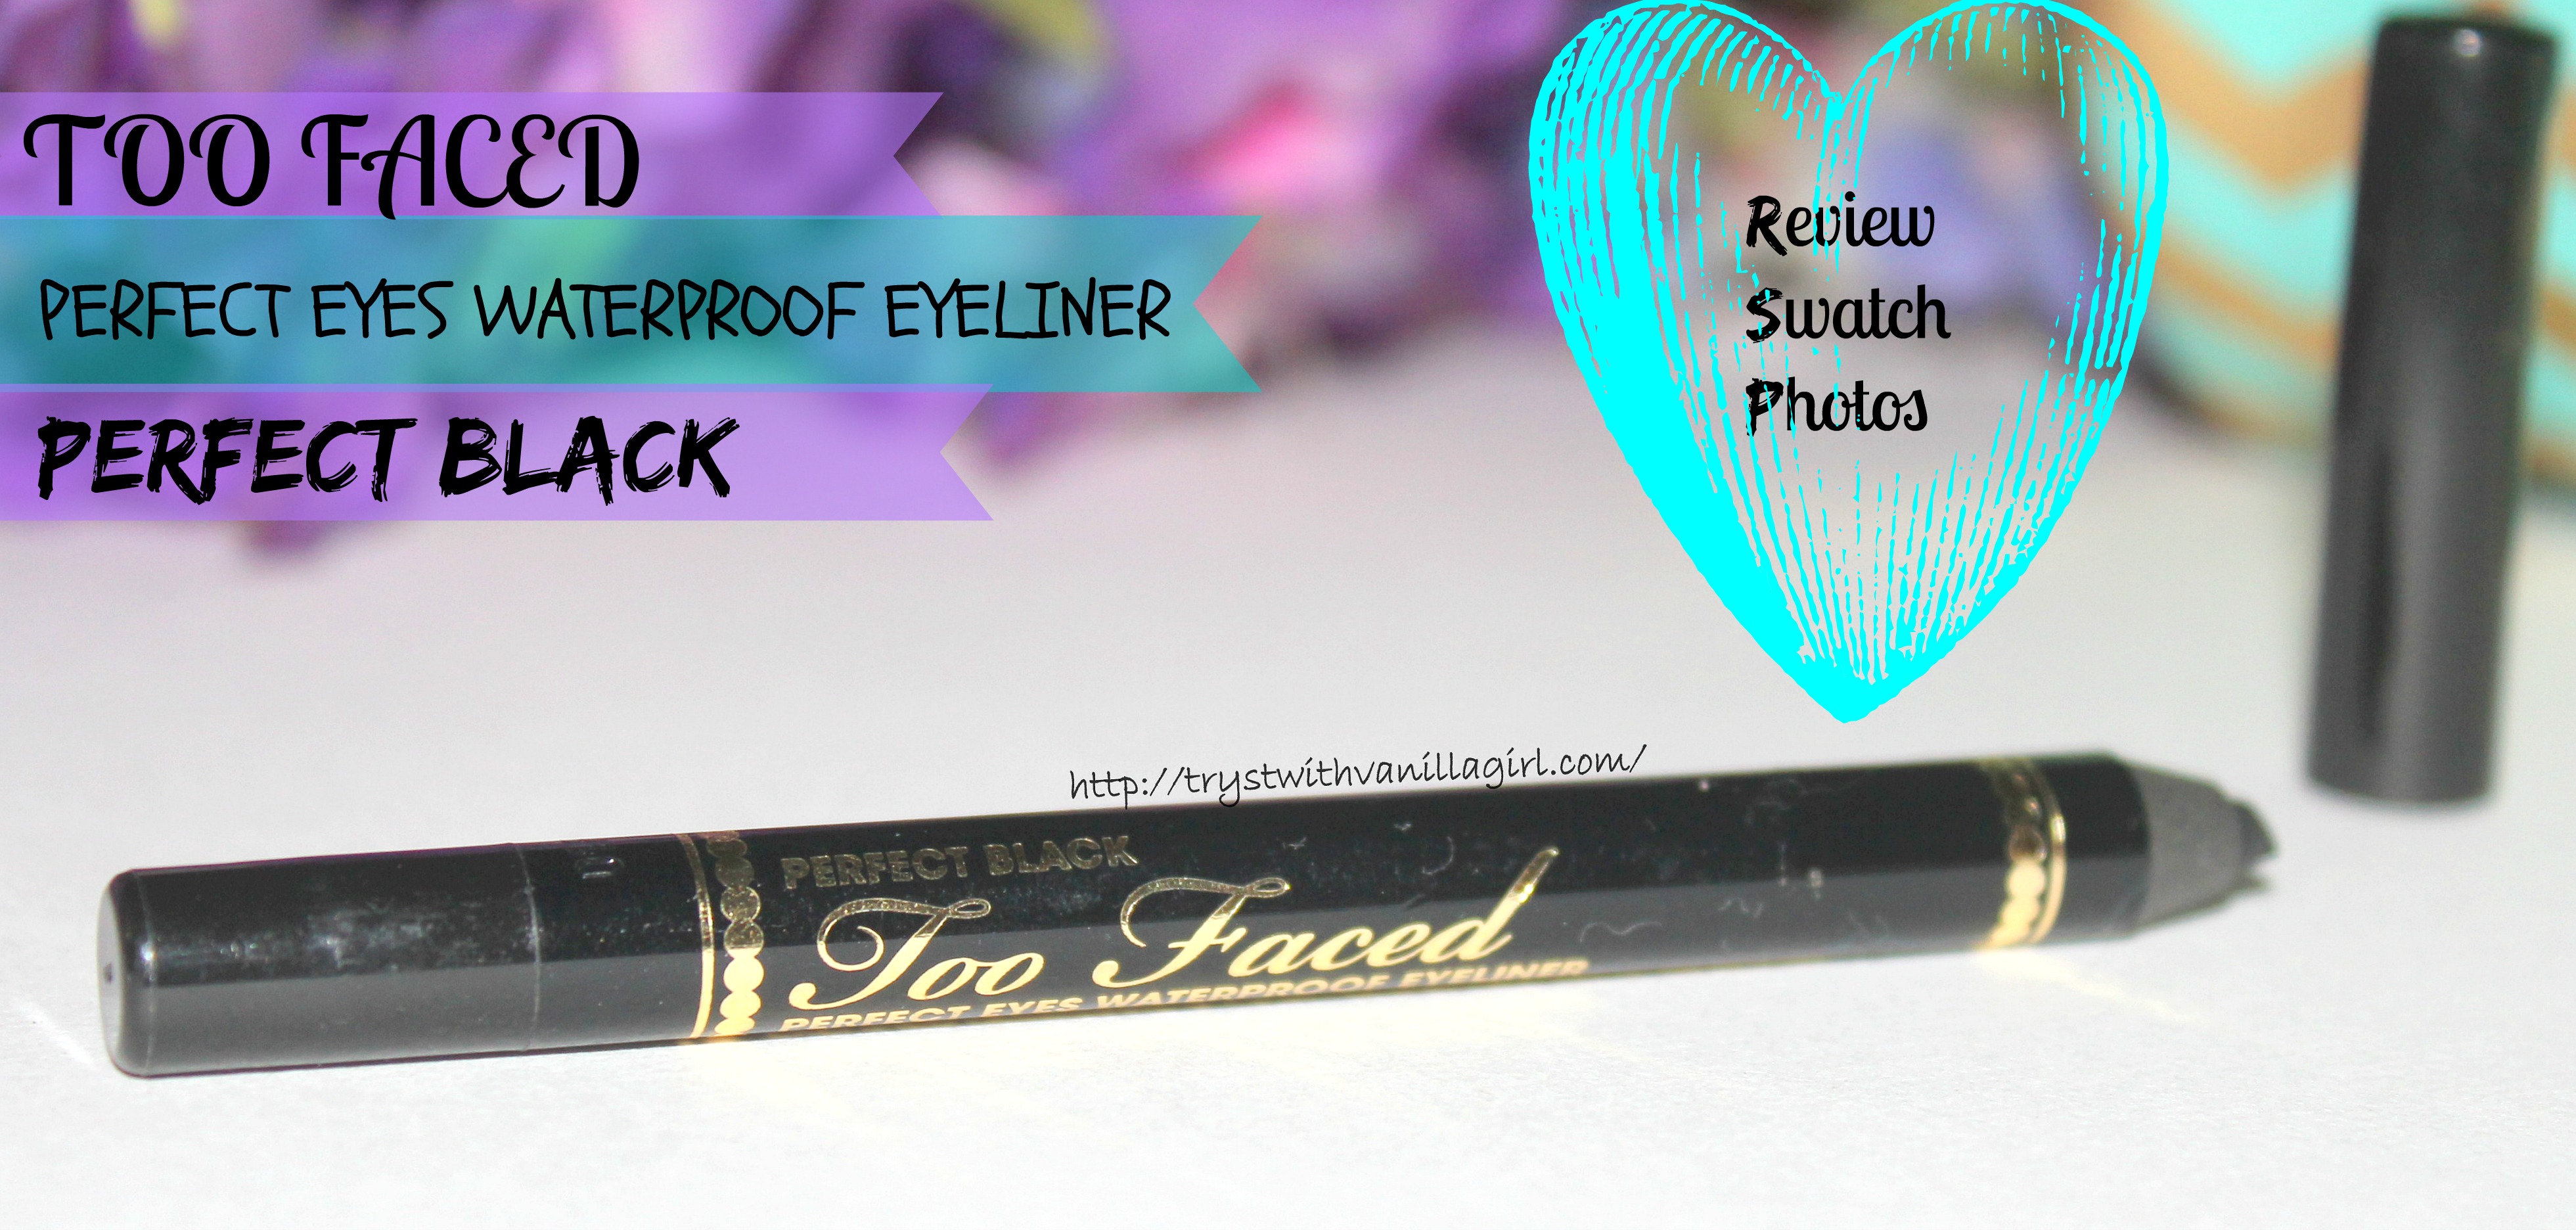 TooFaced Perfect Eyes Waterproof Eyeliner Perfect Black Review,Swatch.Photos